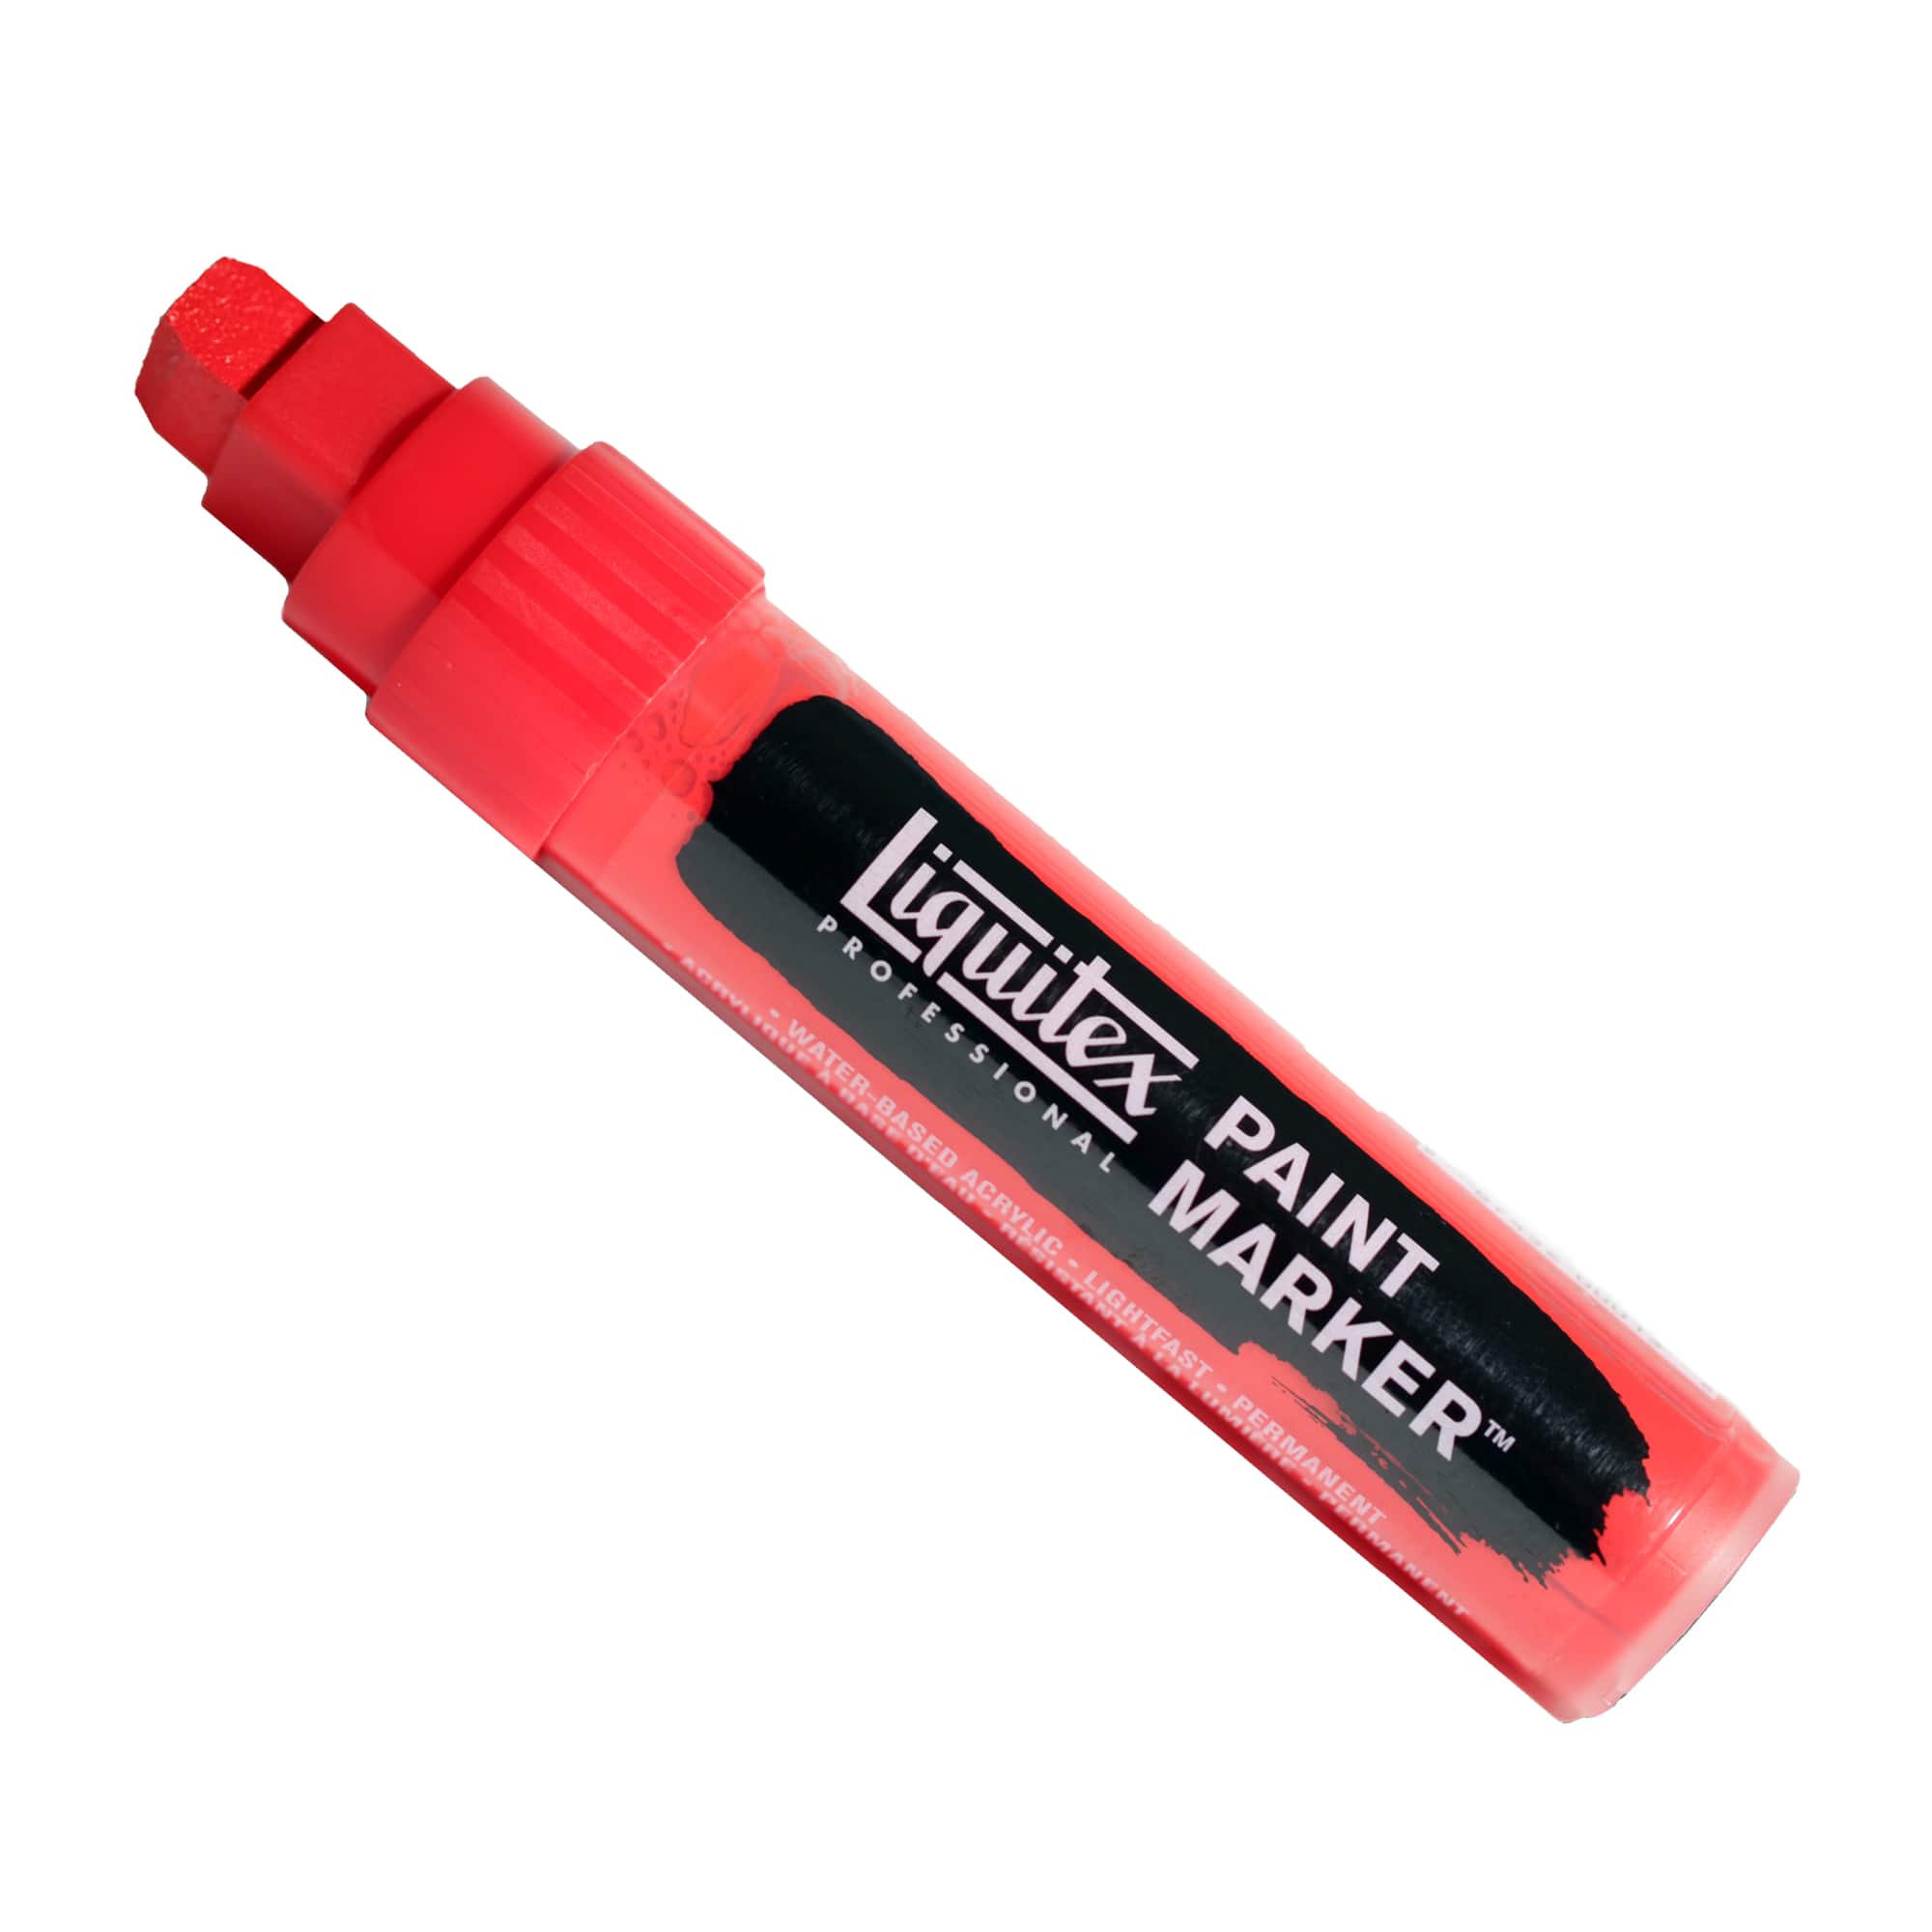 Liquitex Professional Paint Marker Set - VIBRANT - 6 x Wide (15mm